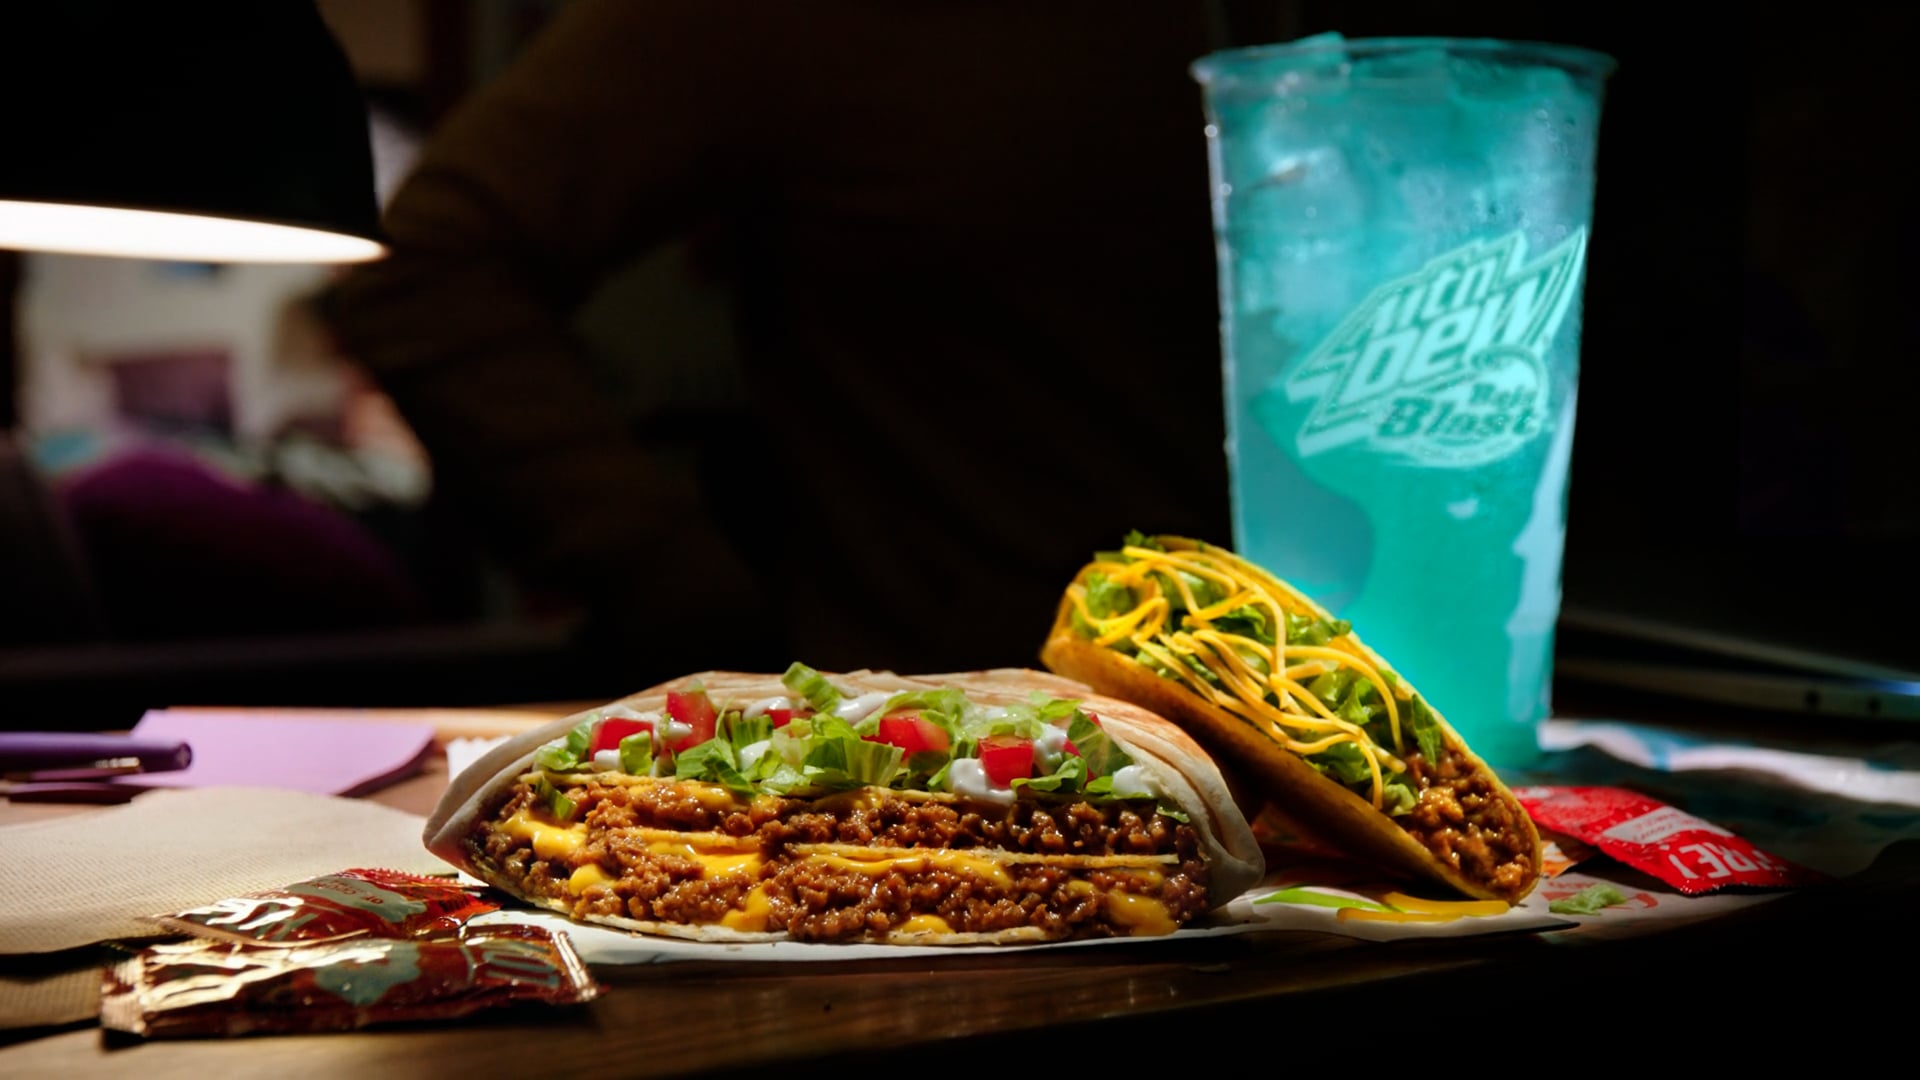 Taco Bell "Grande Crunchwrap Meal"